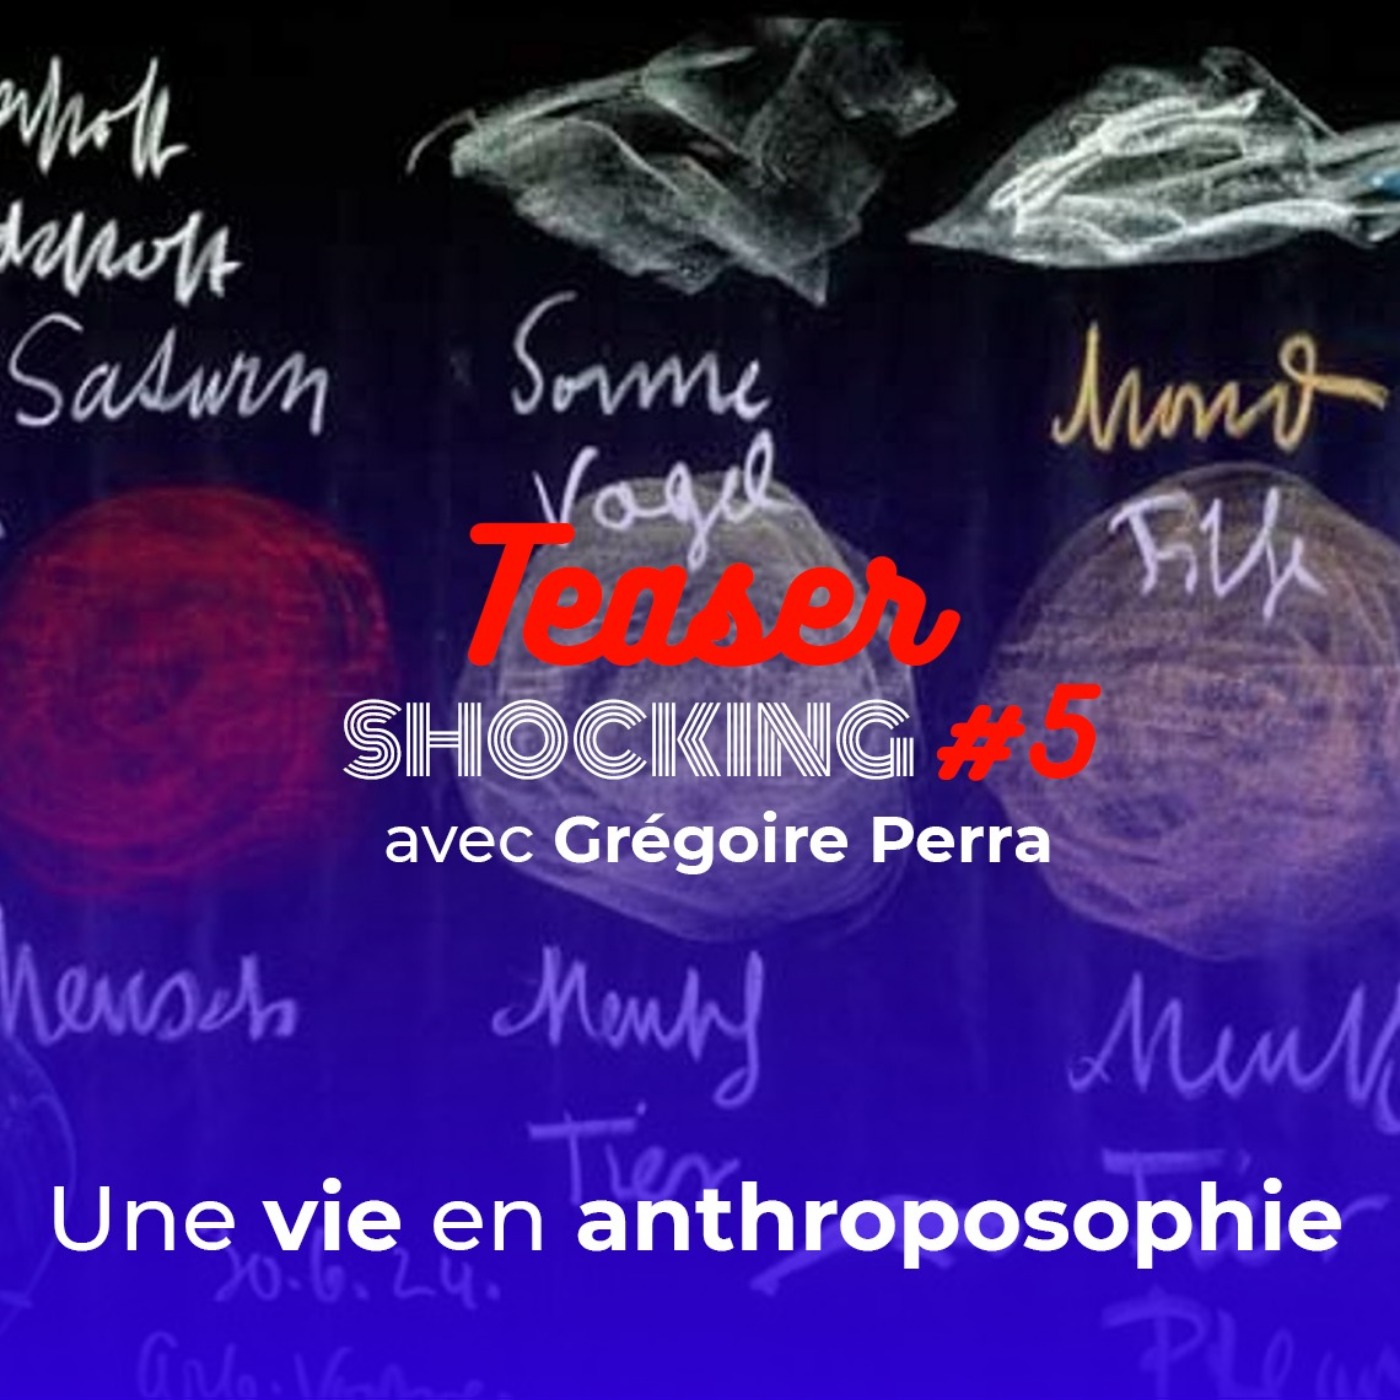 Une vie en anthroposophie (Teaser), avec Grégoire Perra - SHOCKING #5